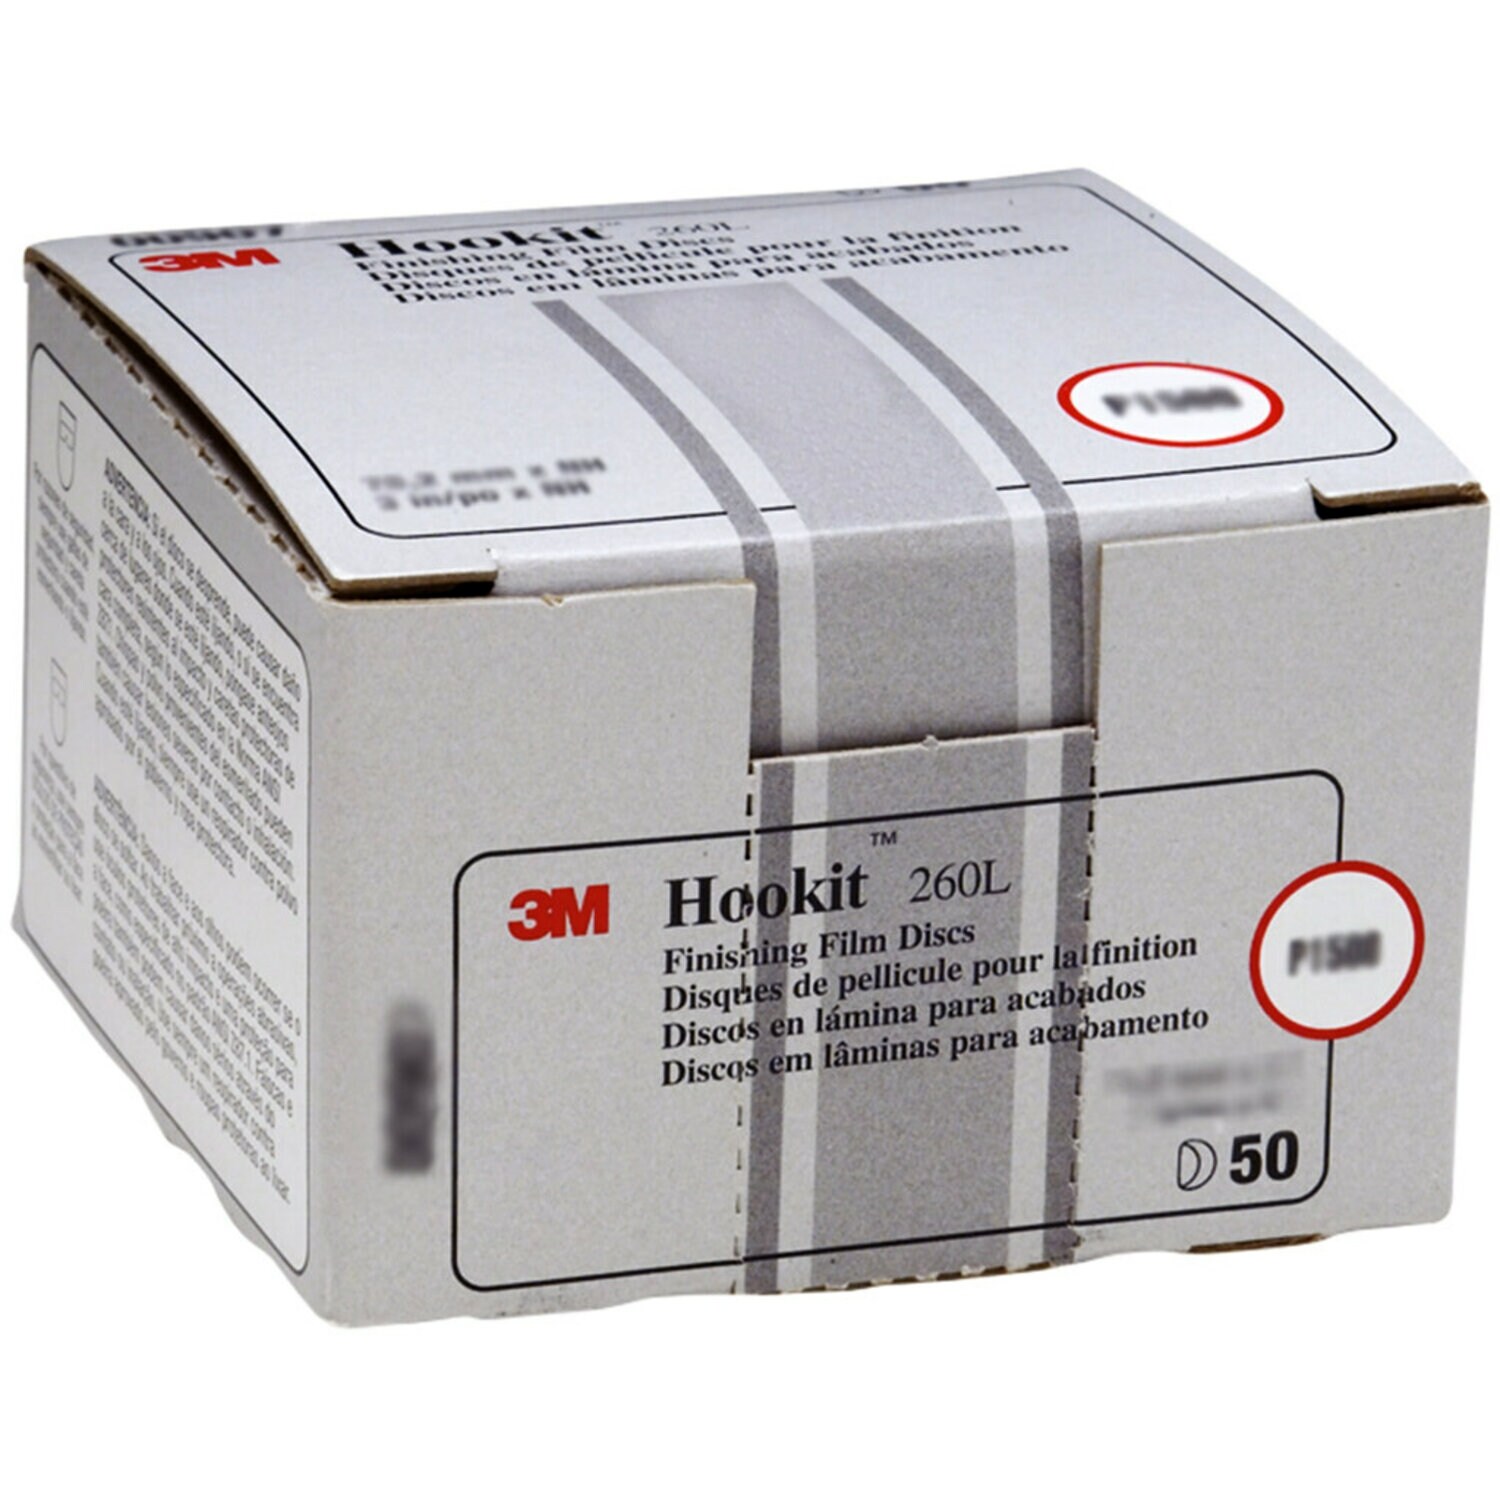 7000000562 - 3M Hookit Finishing Film Abrasive Disc 260L, 00951, 5 in, P1500, 100
discs per carton, 4 cartons per case